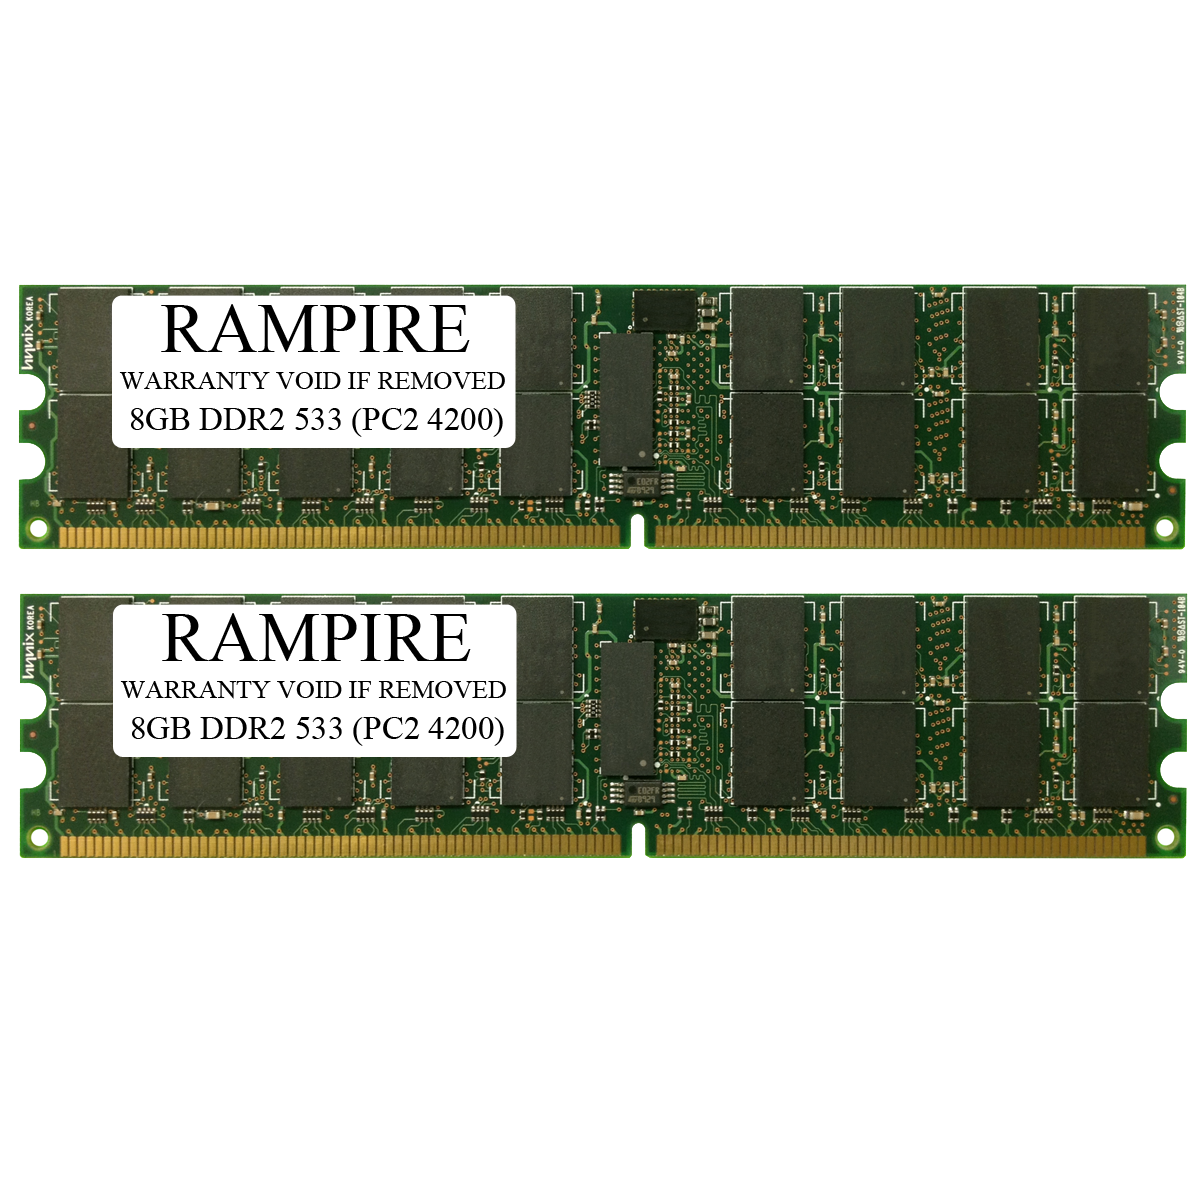 RAMPIRE 16GB (2 x 8GB) DDR2 533 (PC2 4200) 240-Pin SDRAM 4Rx4 Standard Profile 1.8V ECC Registered Server Memory